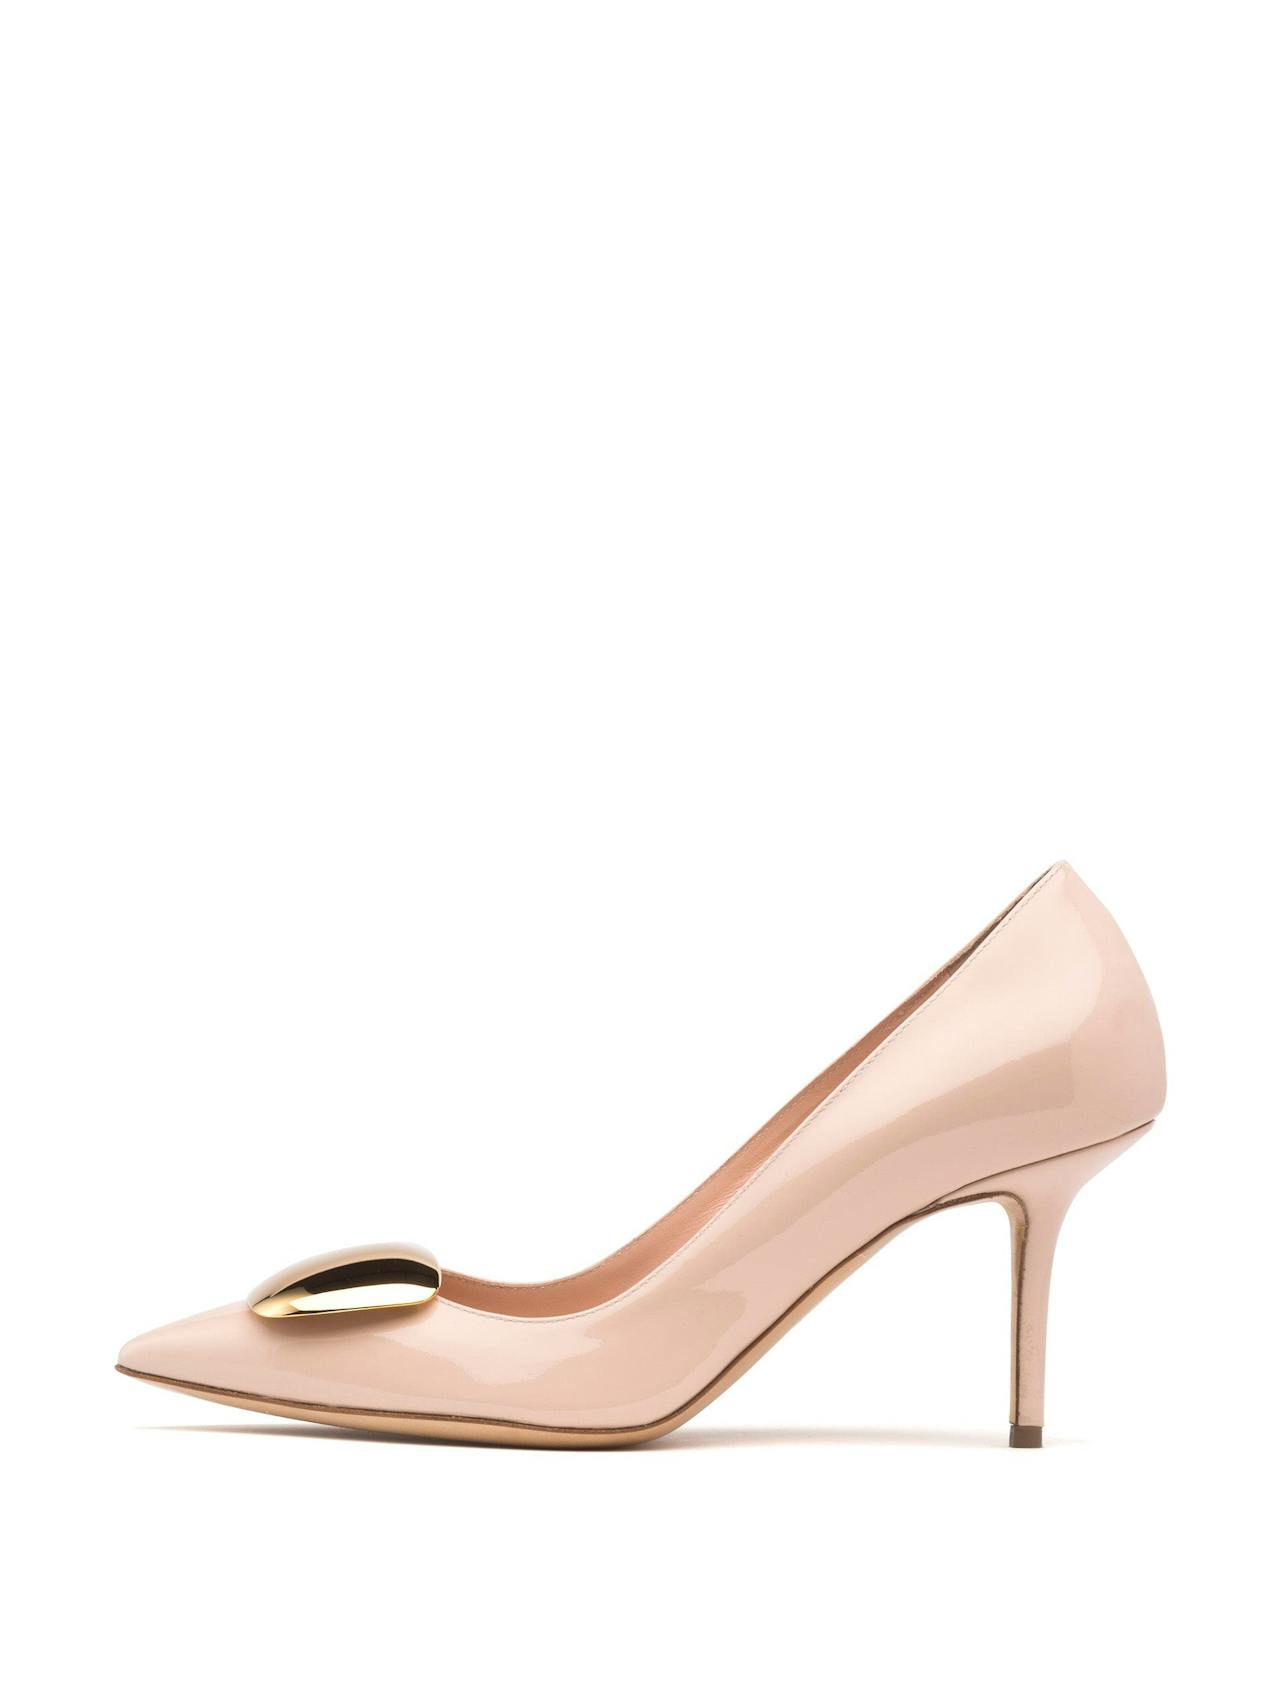 Crema patent Henna Cromato heels